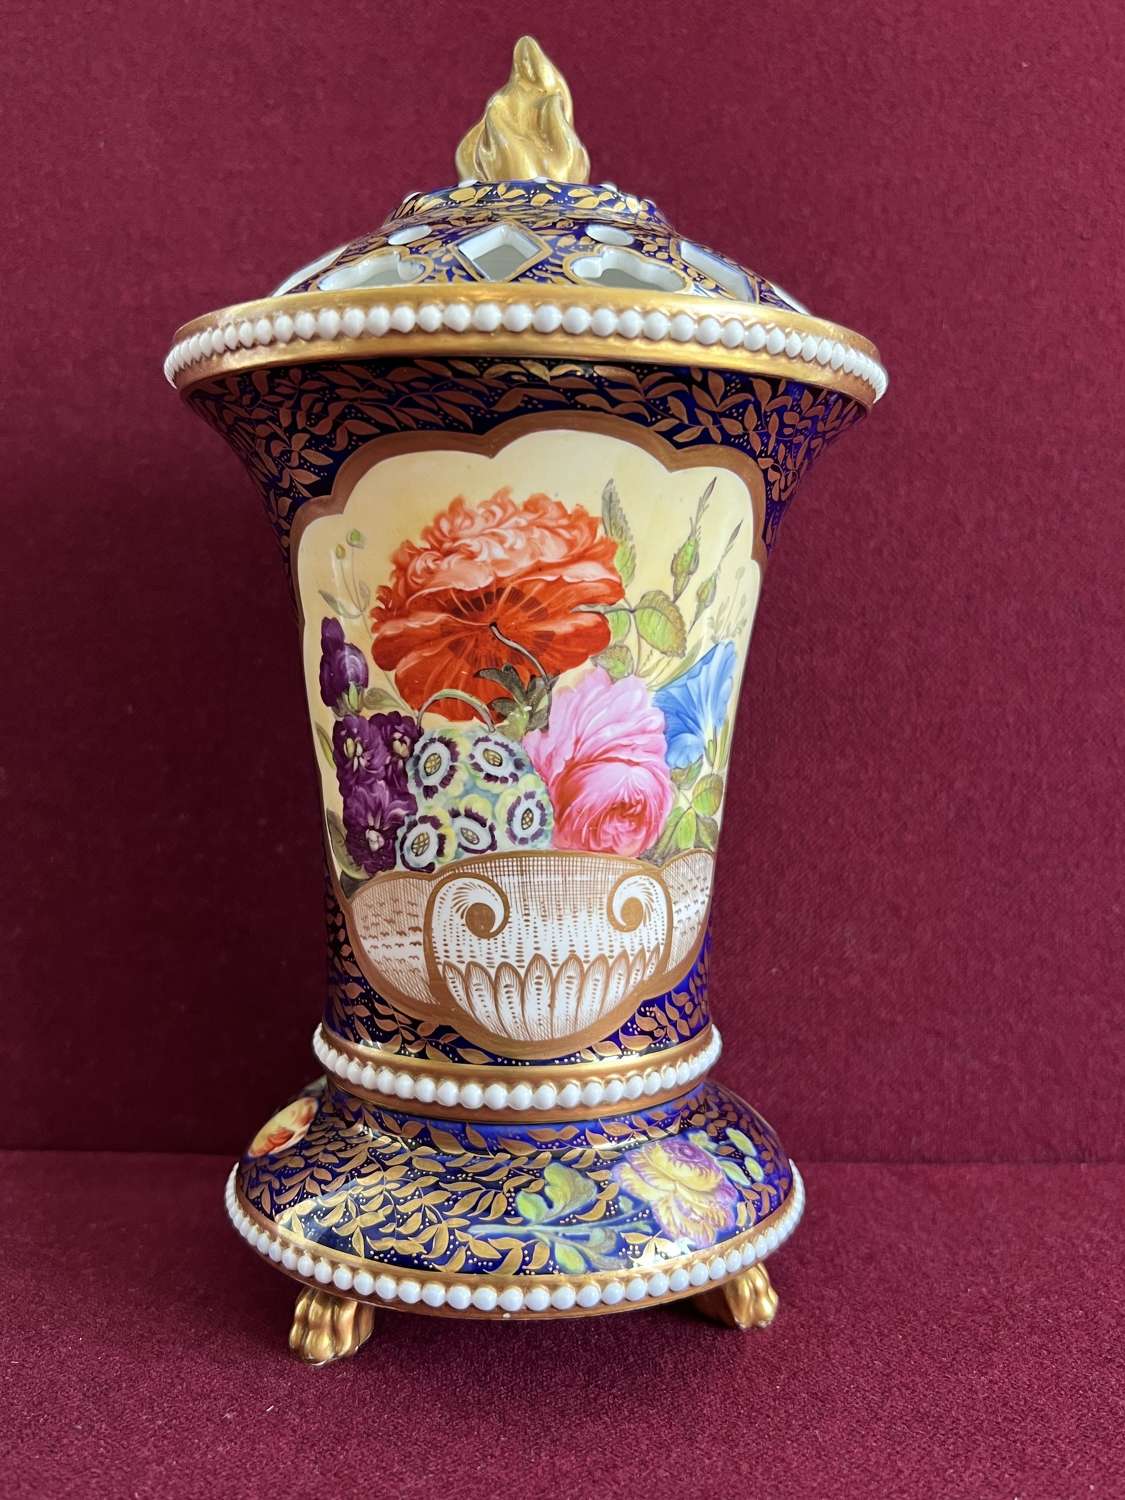 A Spode Porcelain beaded Pot Pourri Vase c.1820-1825